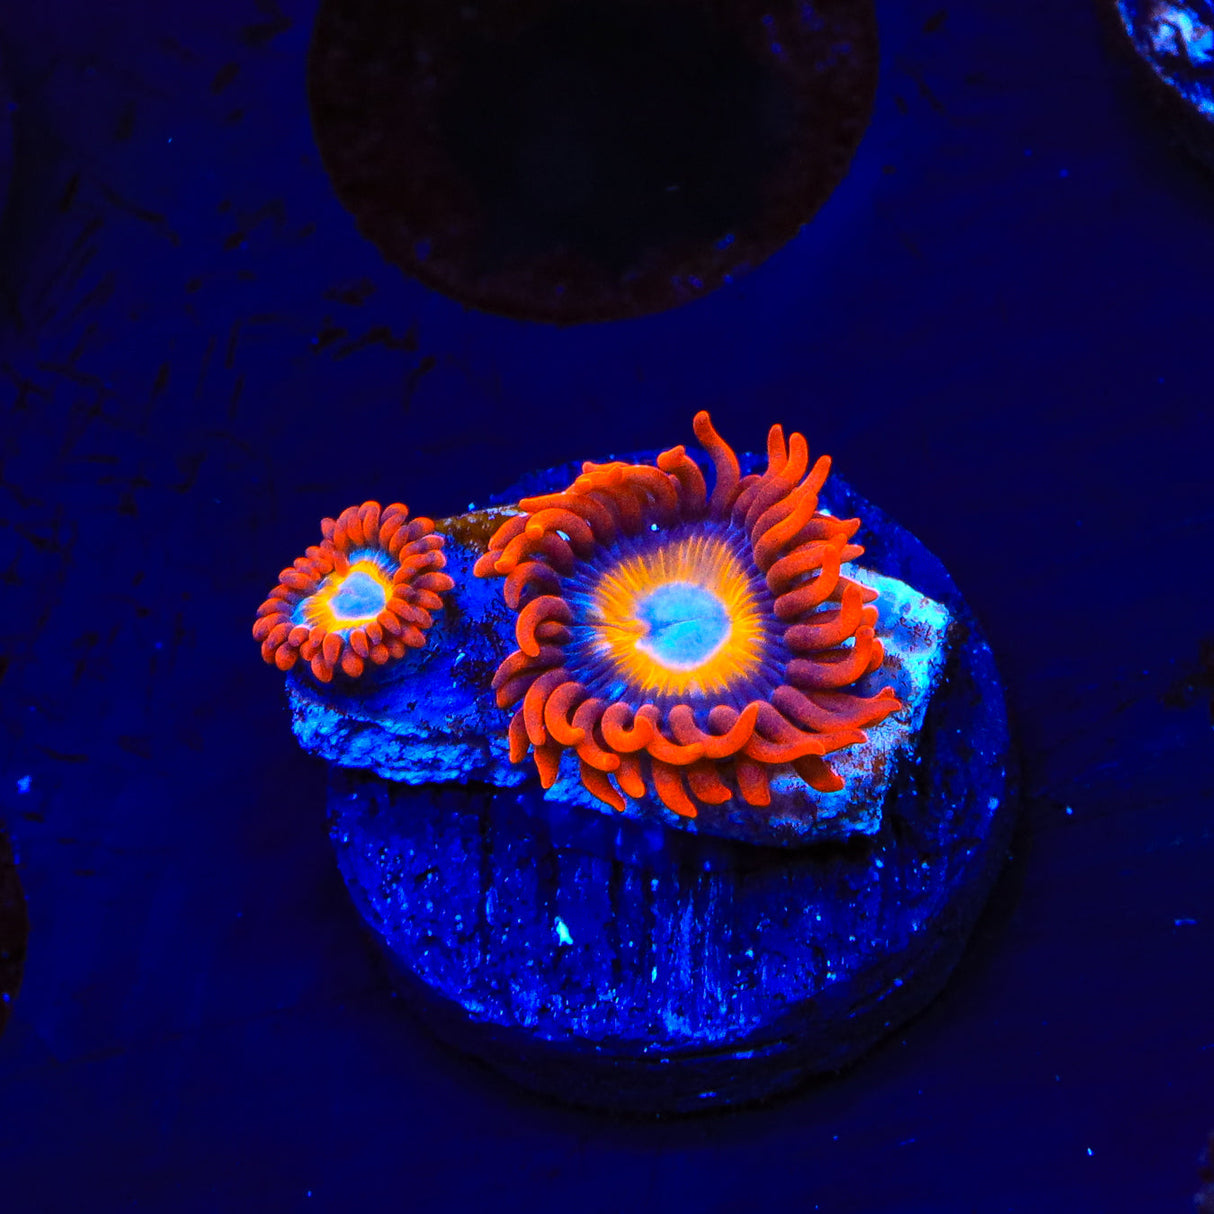 Blue Eye Blondie Zoanthids Coral - Top Shelf Aquatics